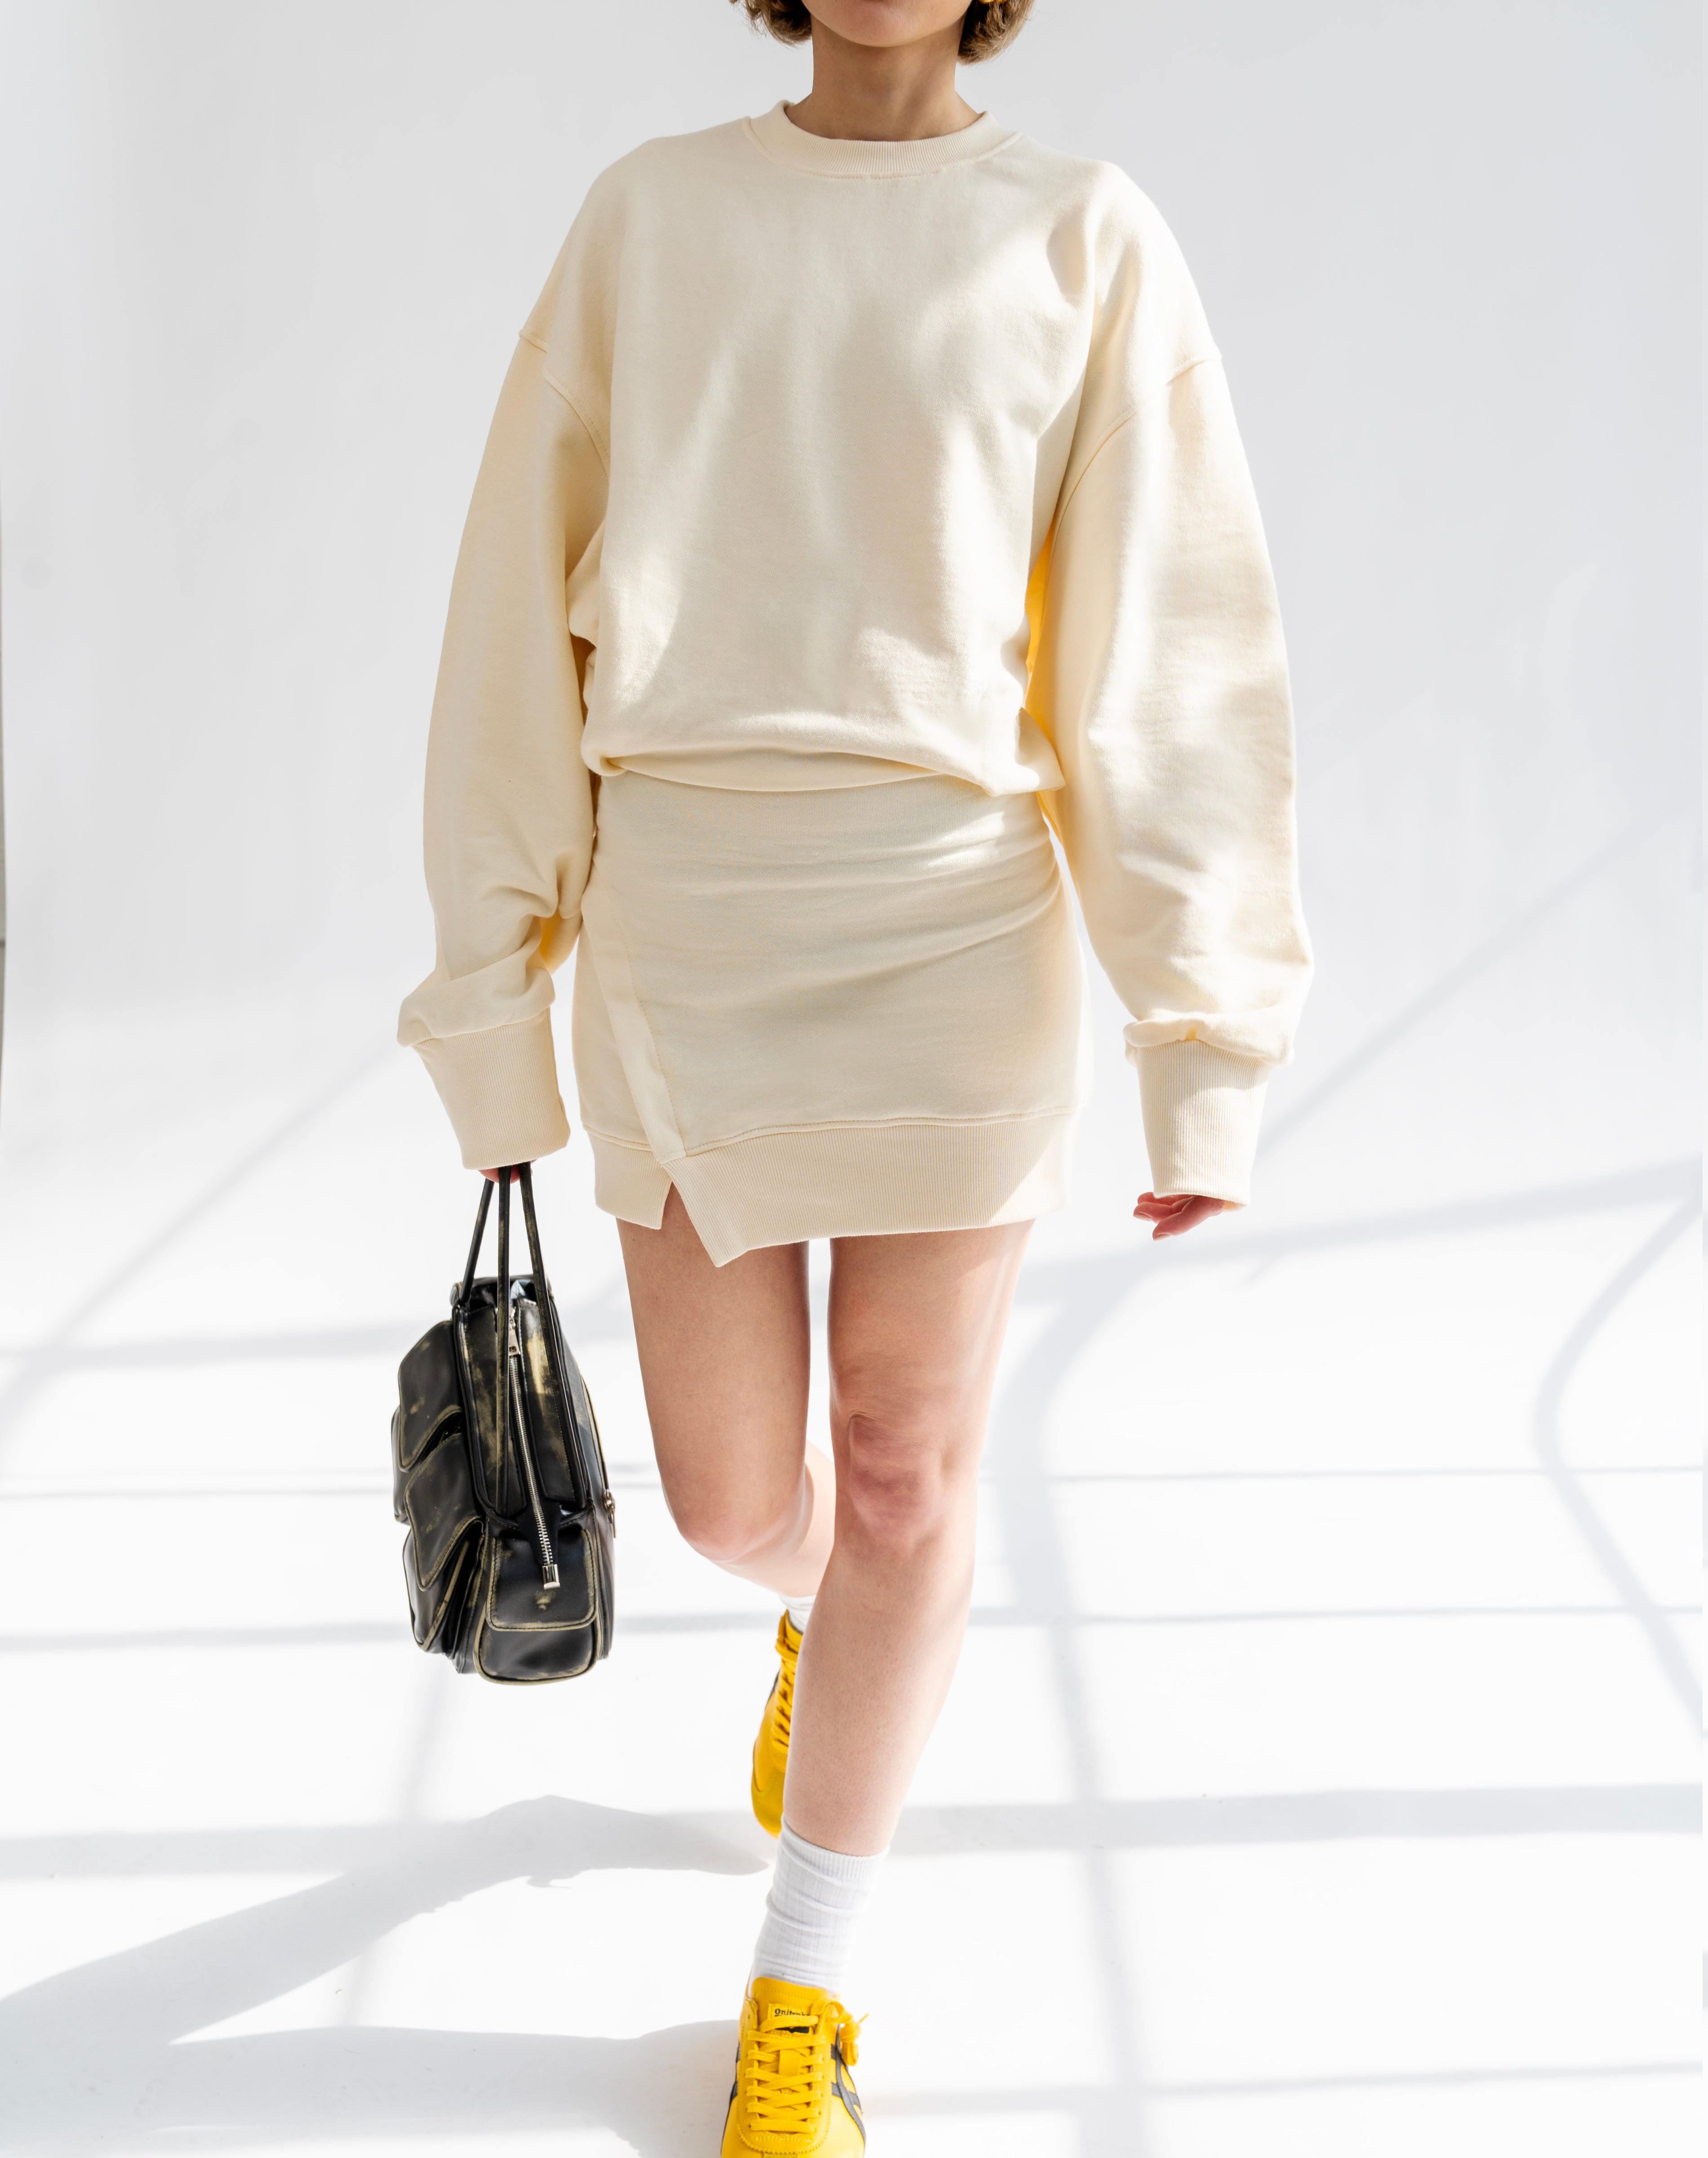 August Sweatshirt Mini Dress, Butter Yellow